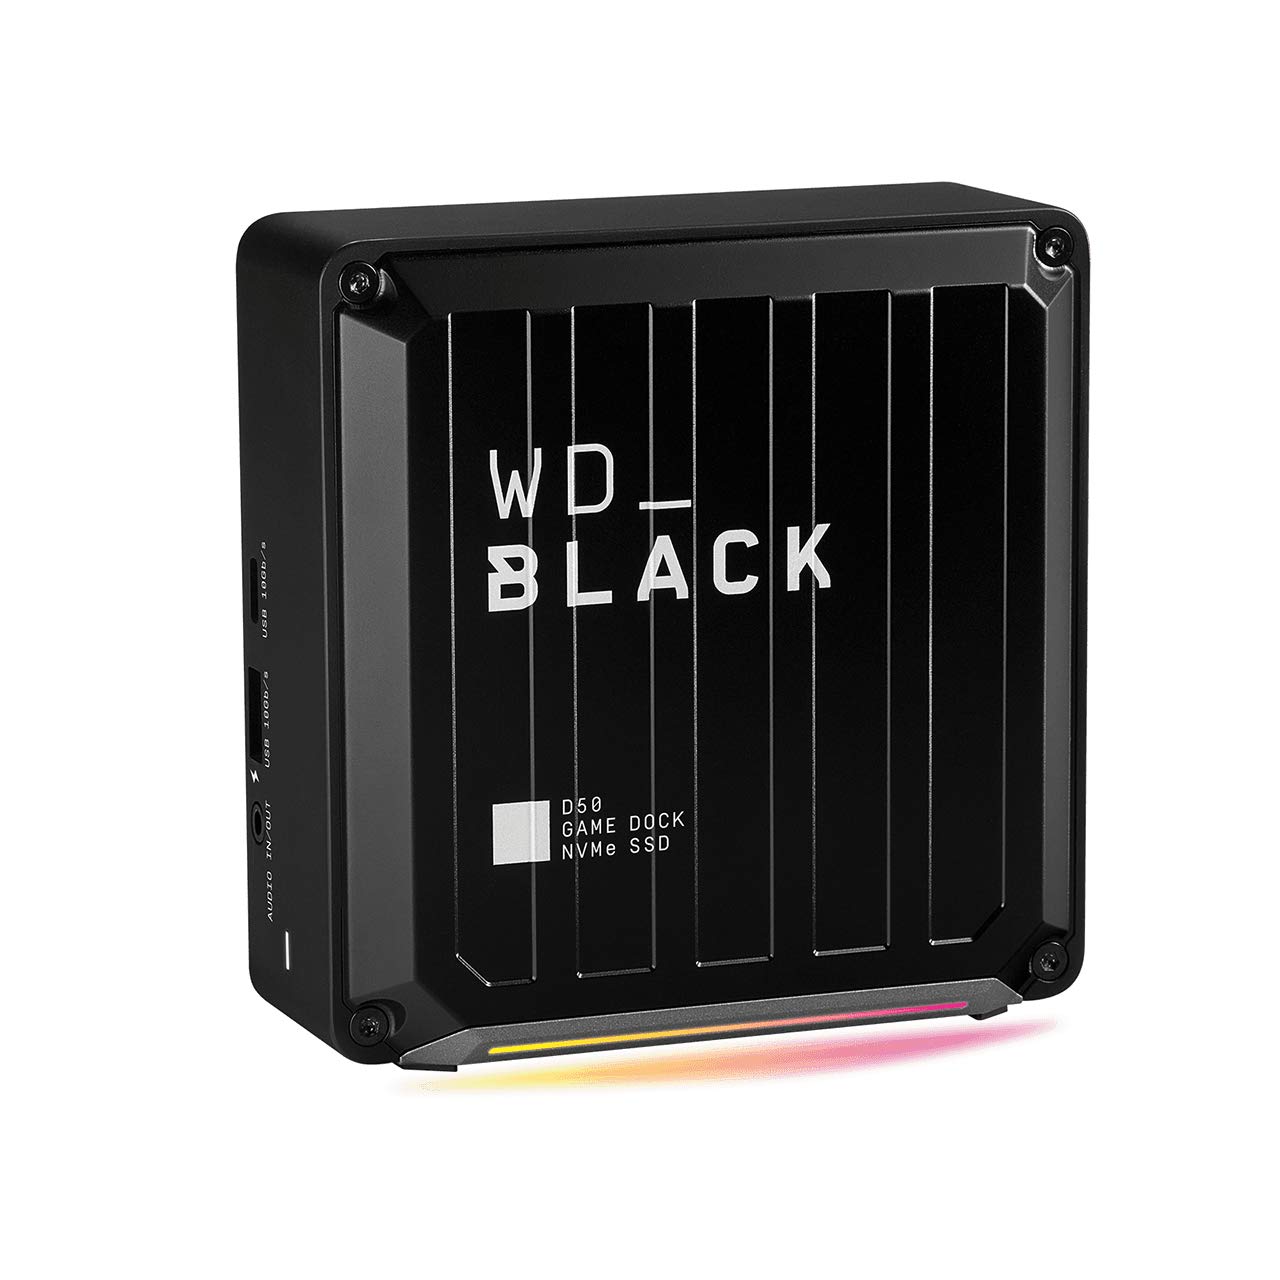 WD BLACK D50 GAME DOCK SSD 1TB